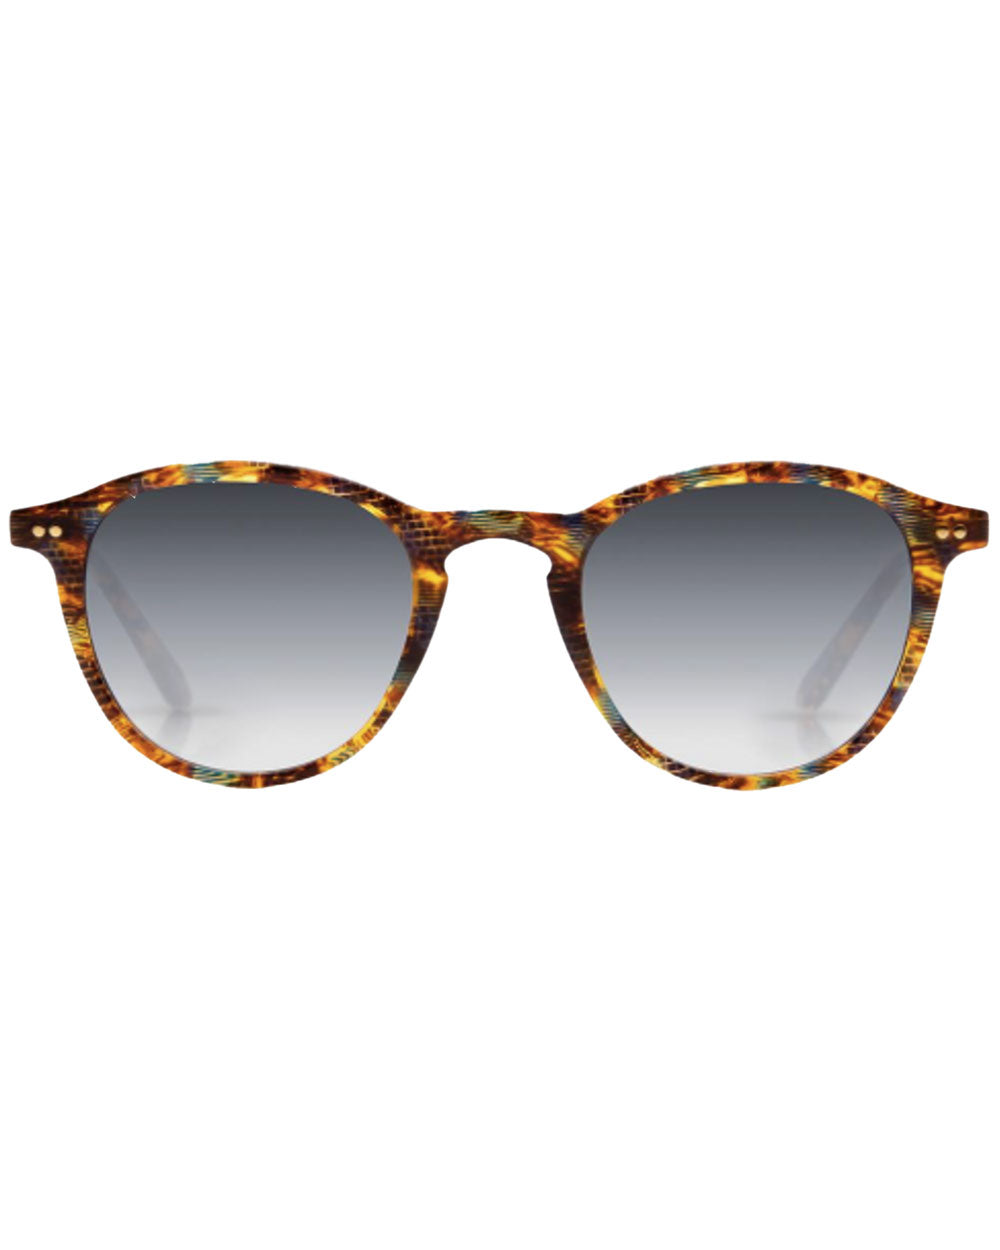 Valence Sunglasses in Heron and 24K Titanium